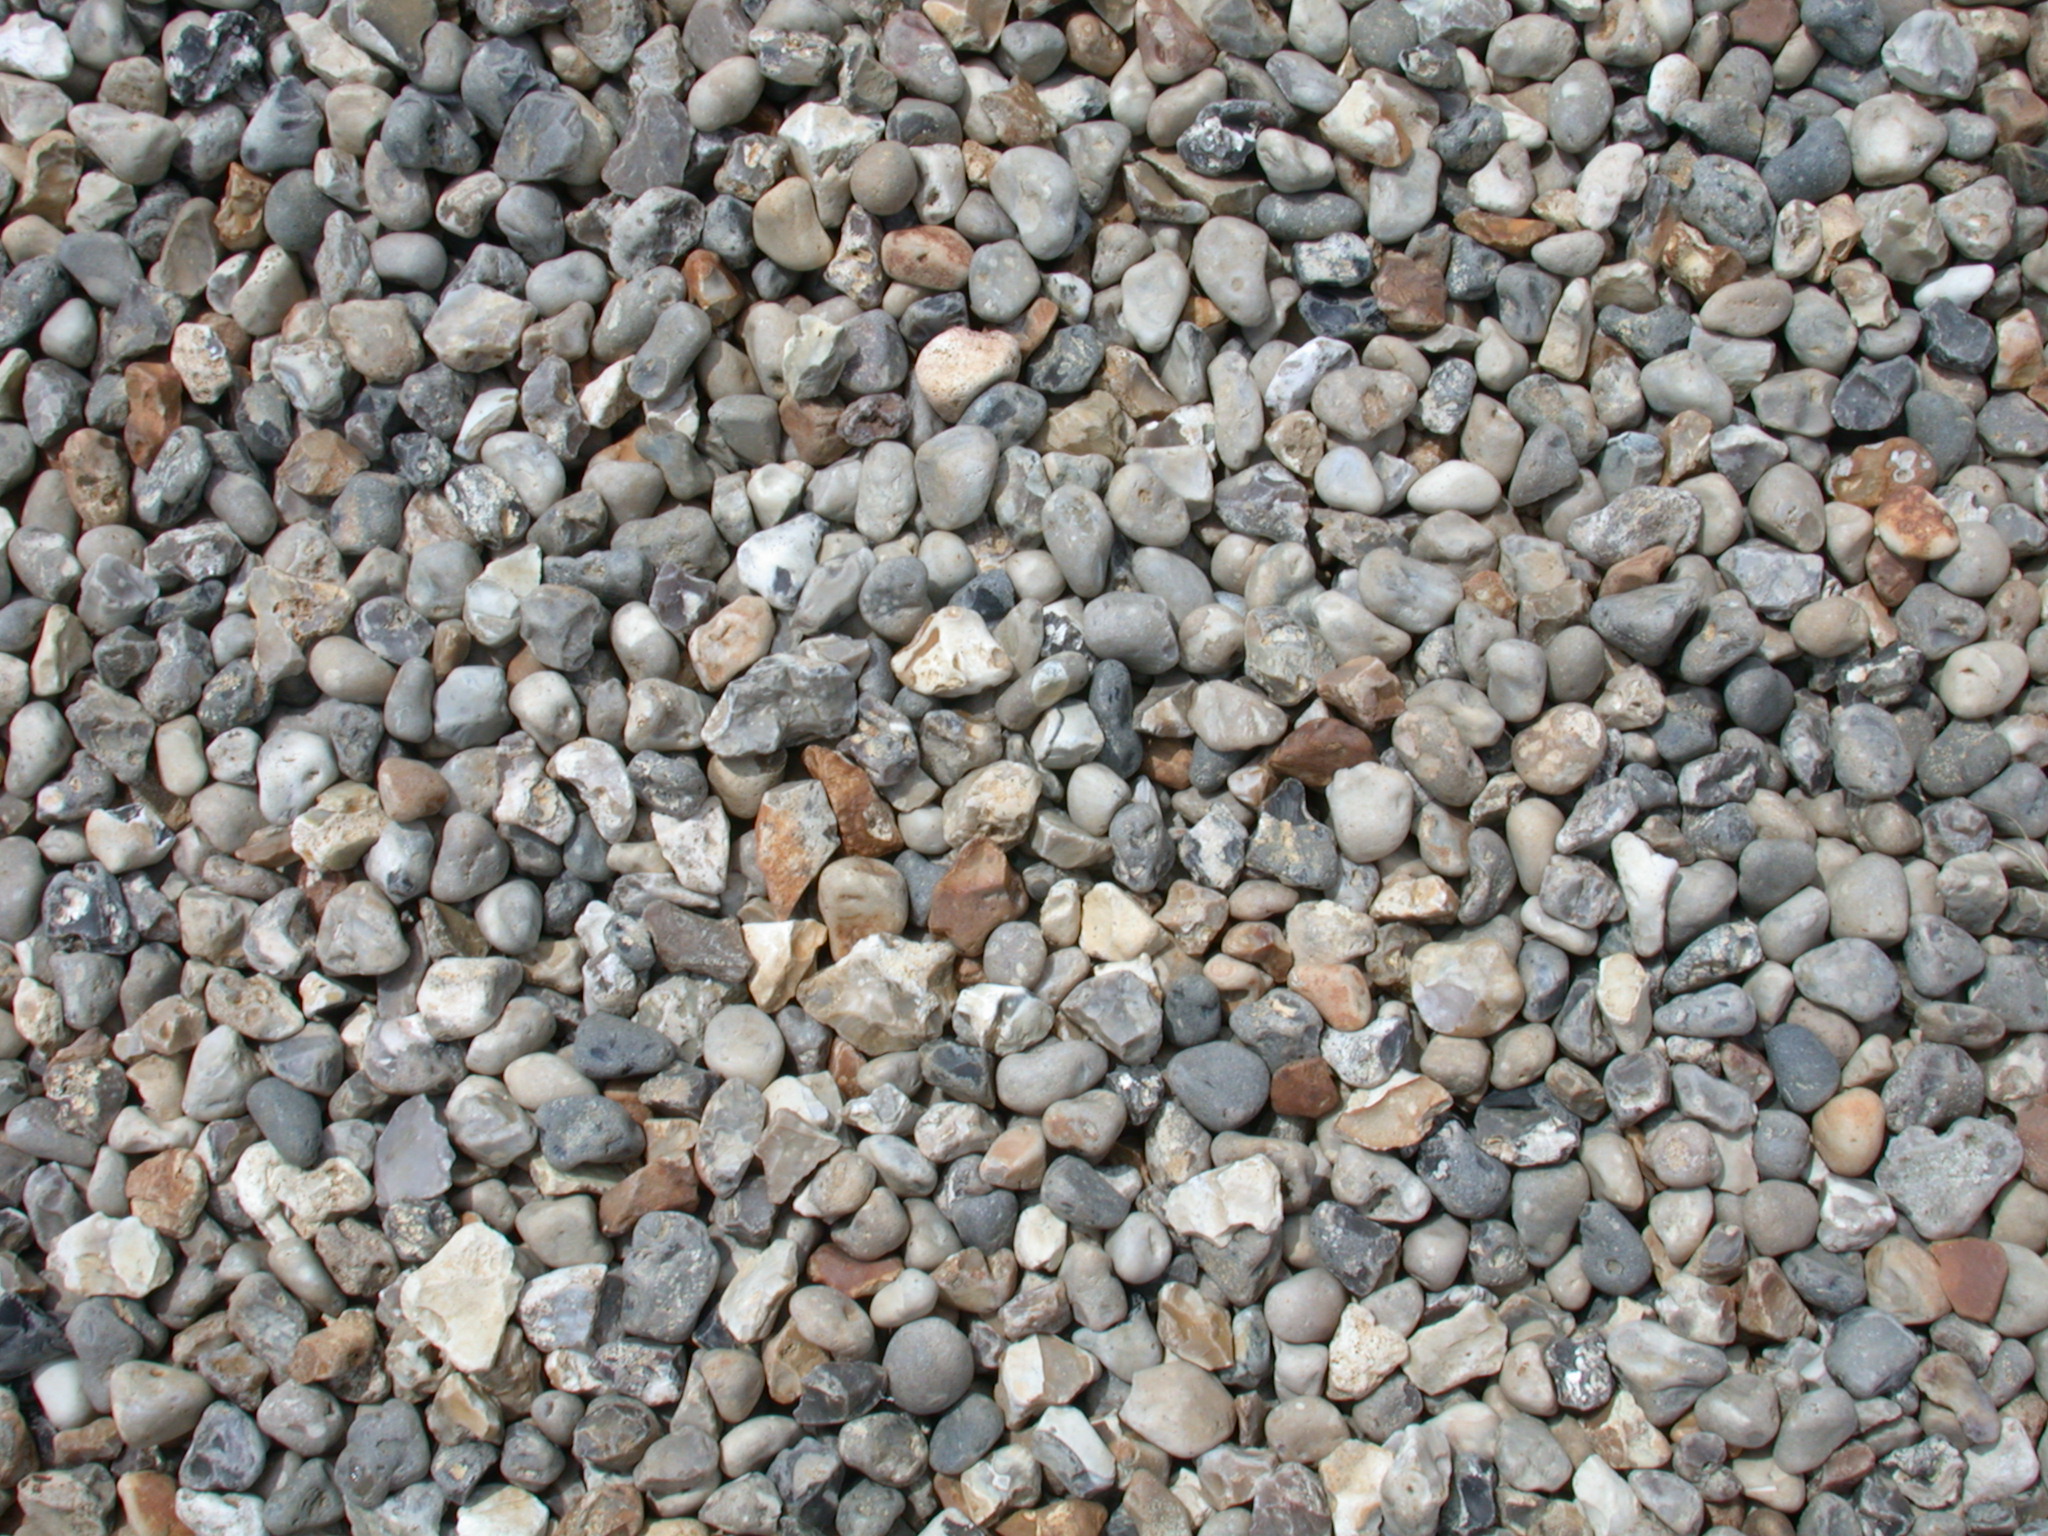 Imageafter Photos Pebbles Small Rock Stones Rocks